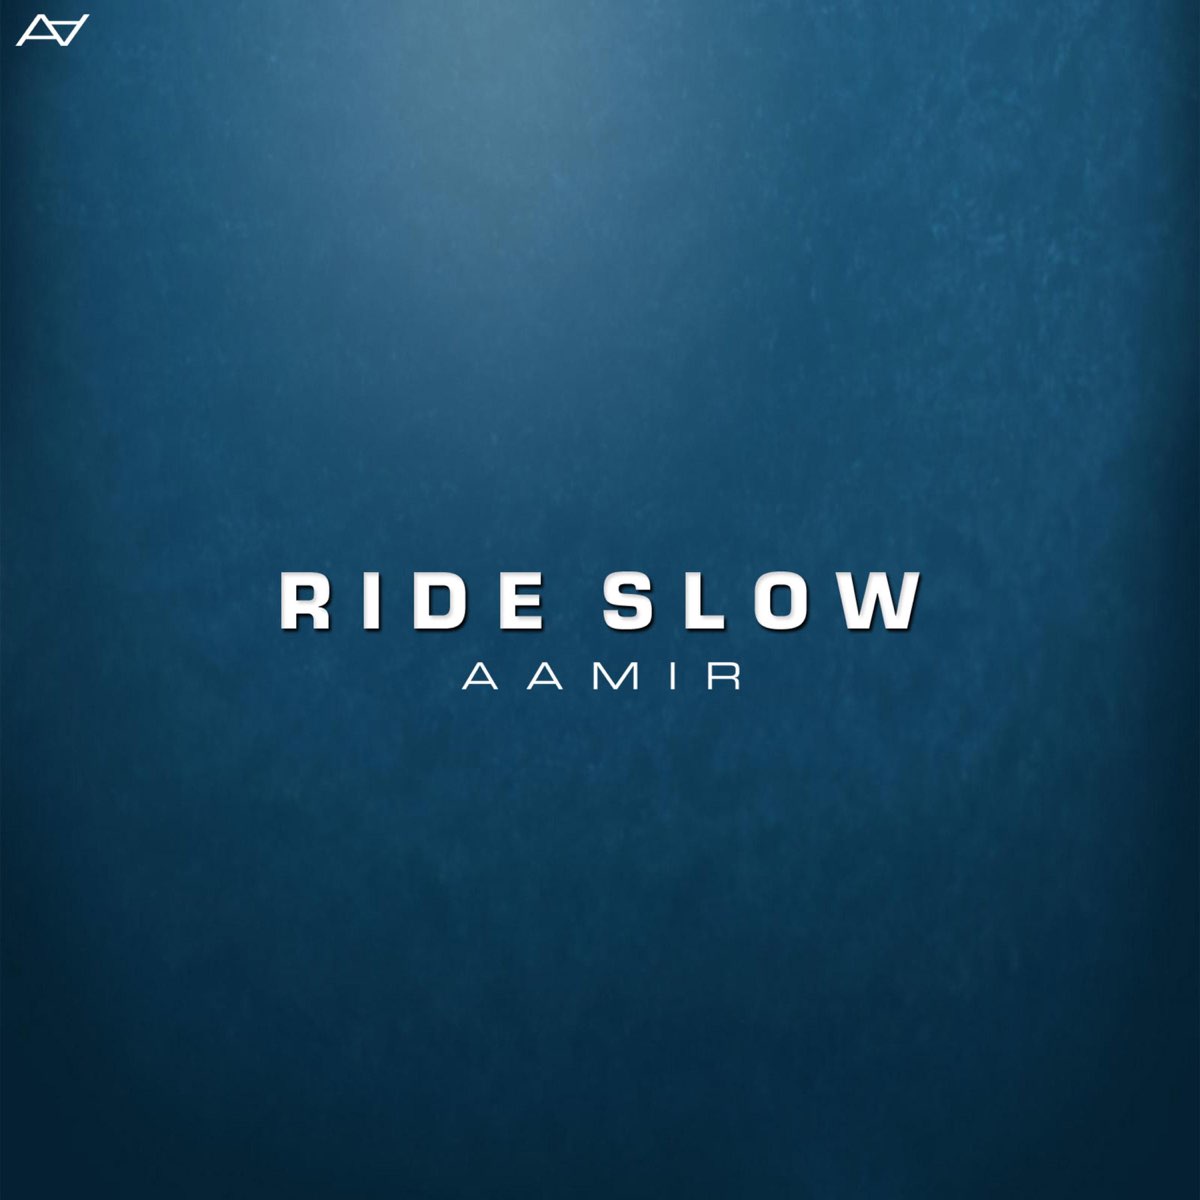 Ride it slowed. Ride album.